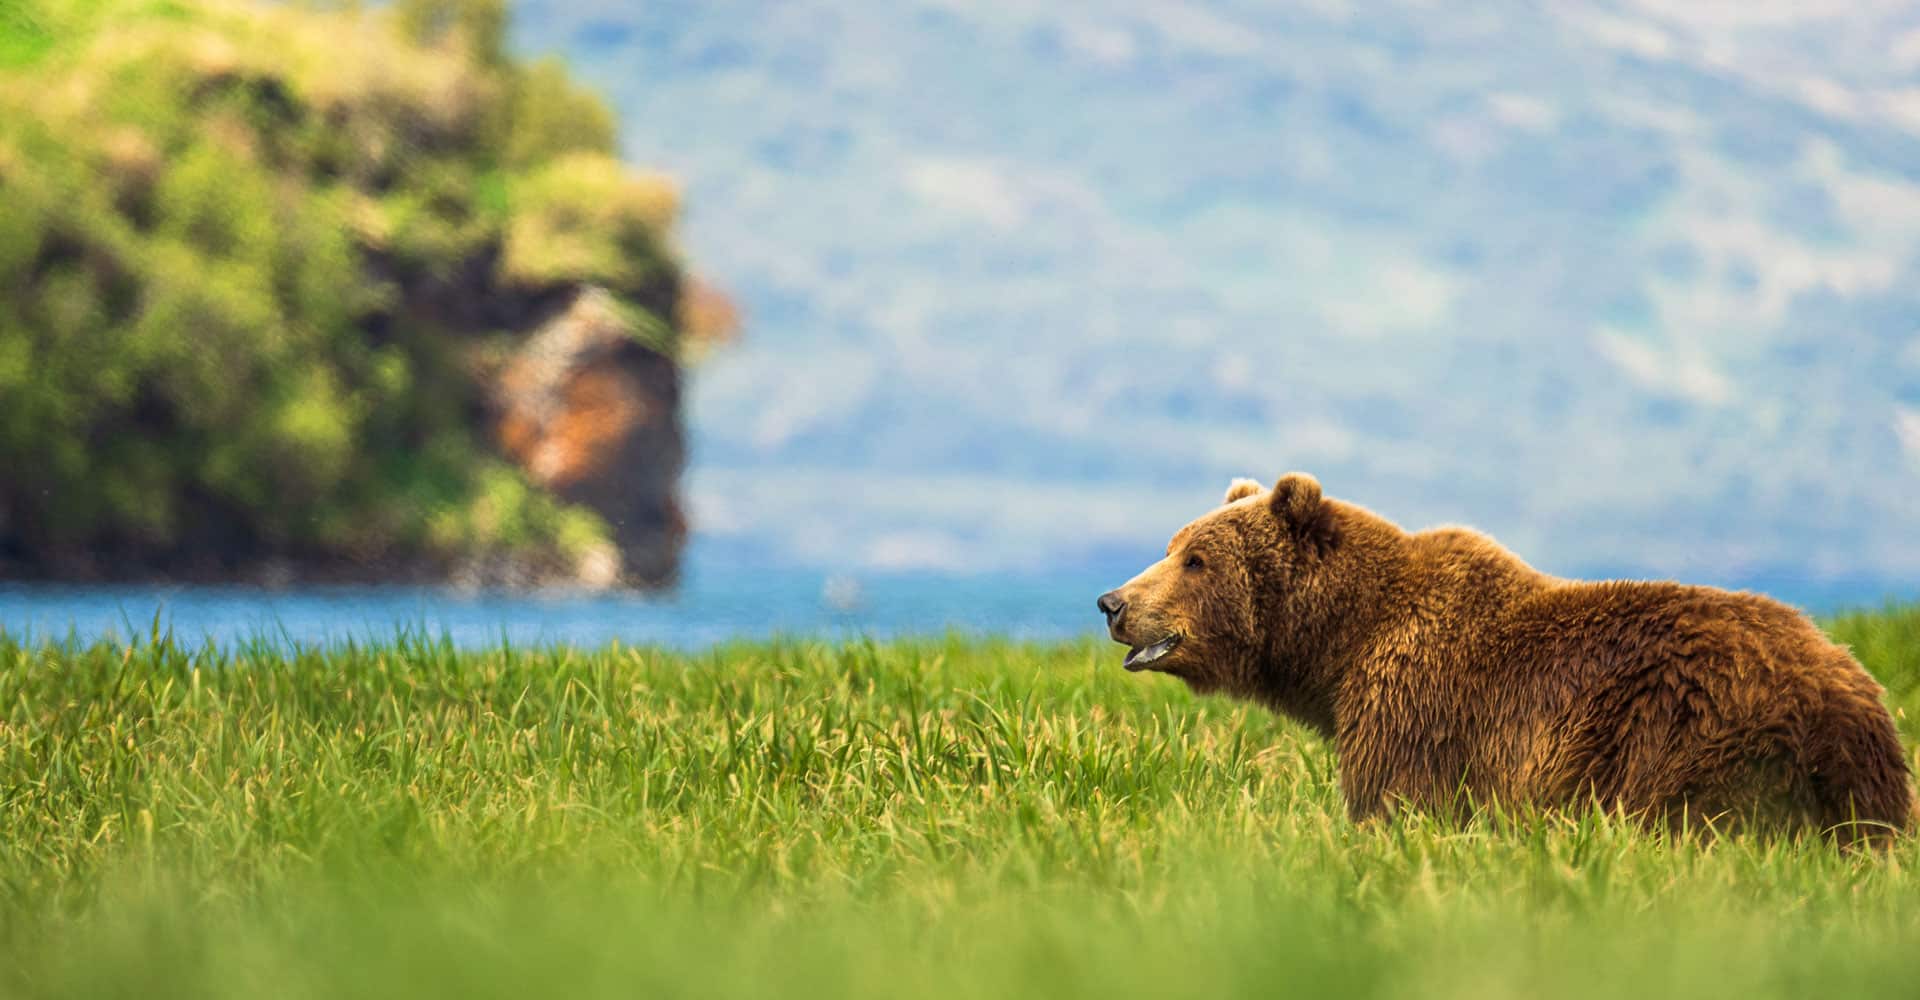 Bear walking in the grass